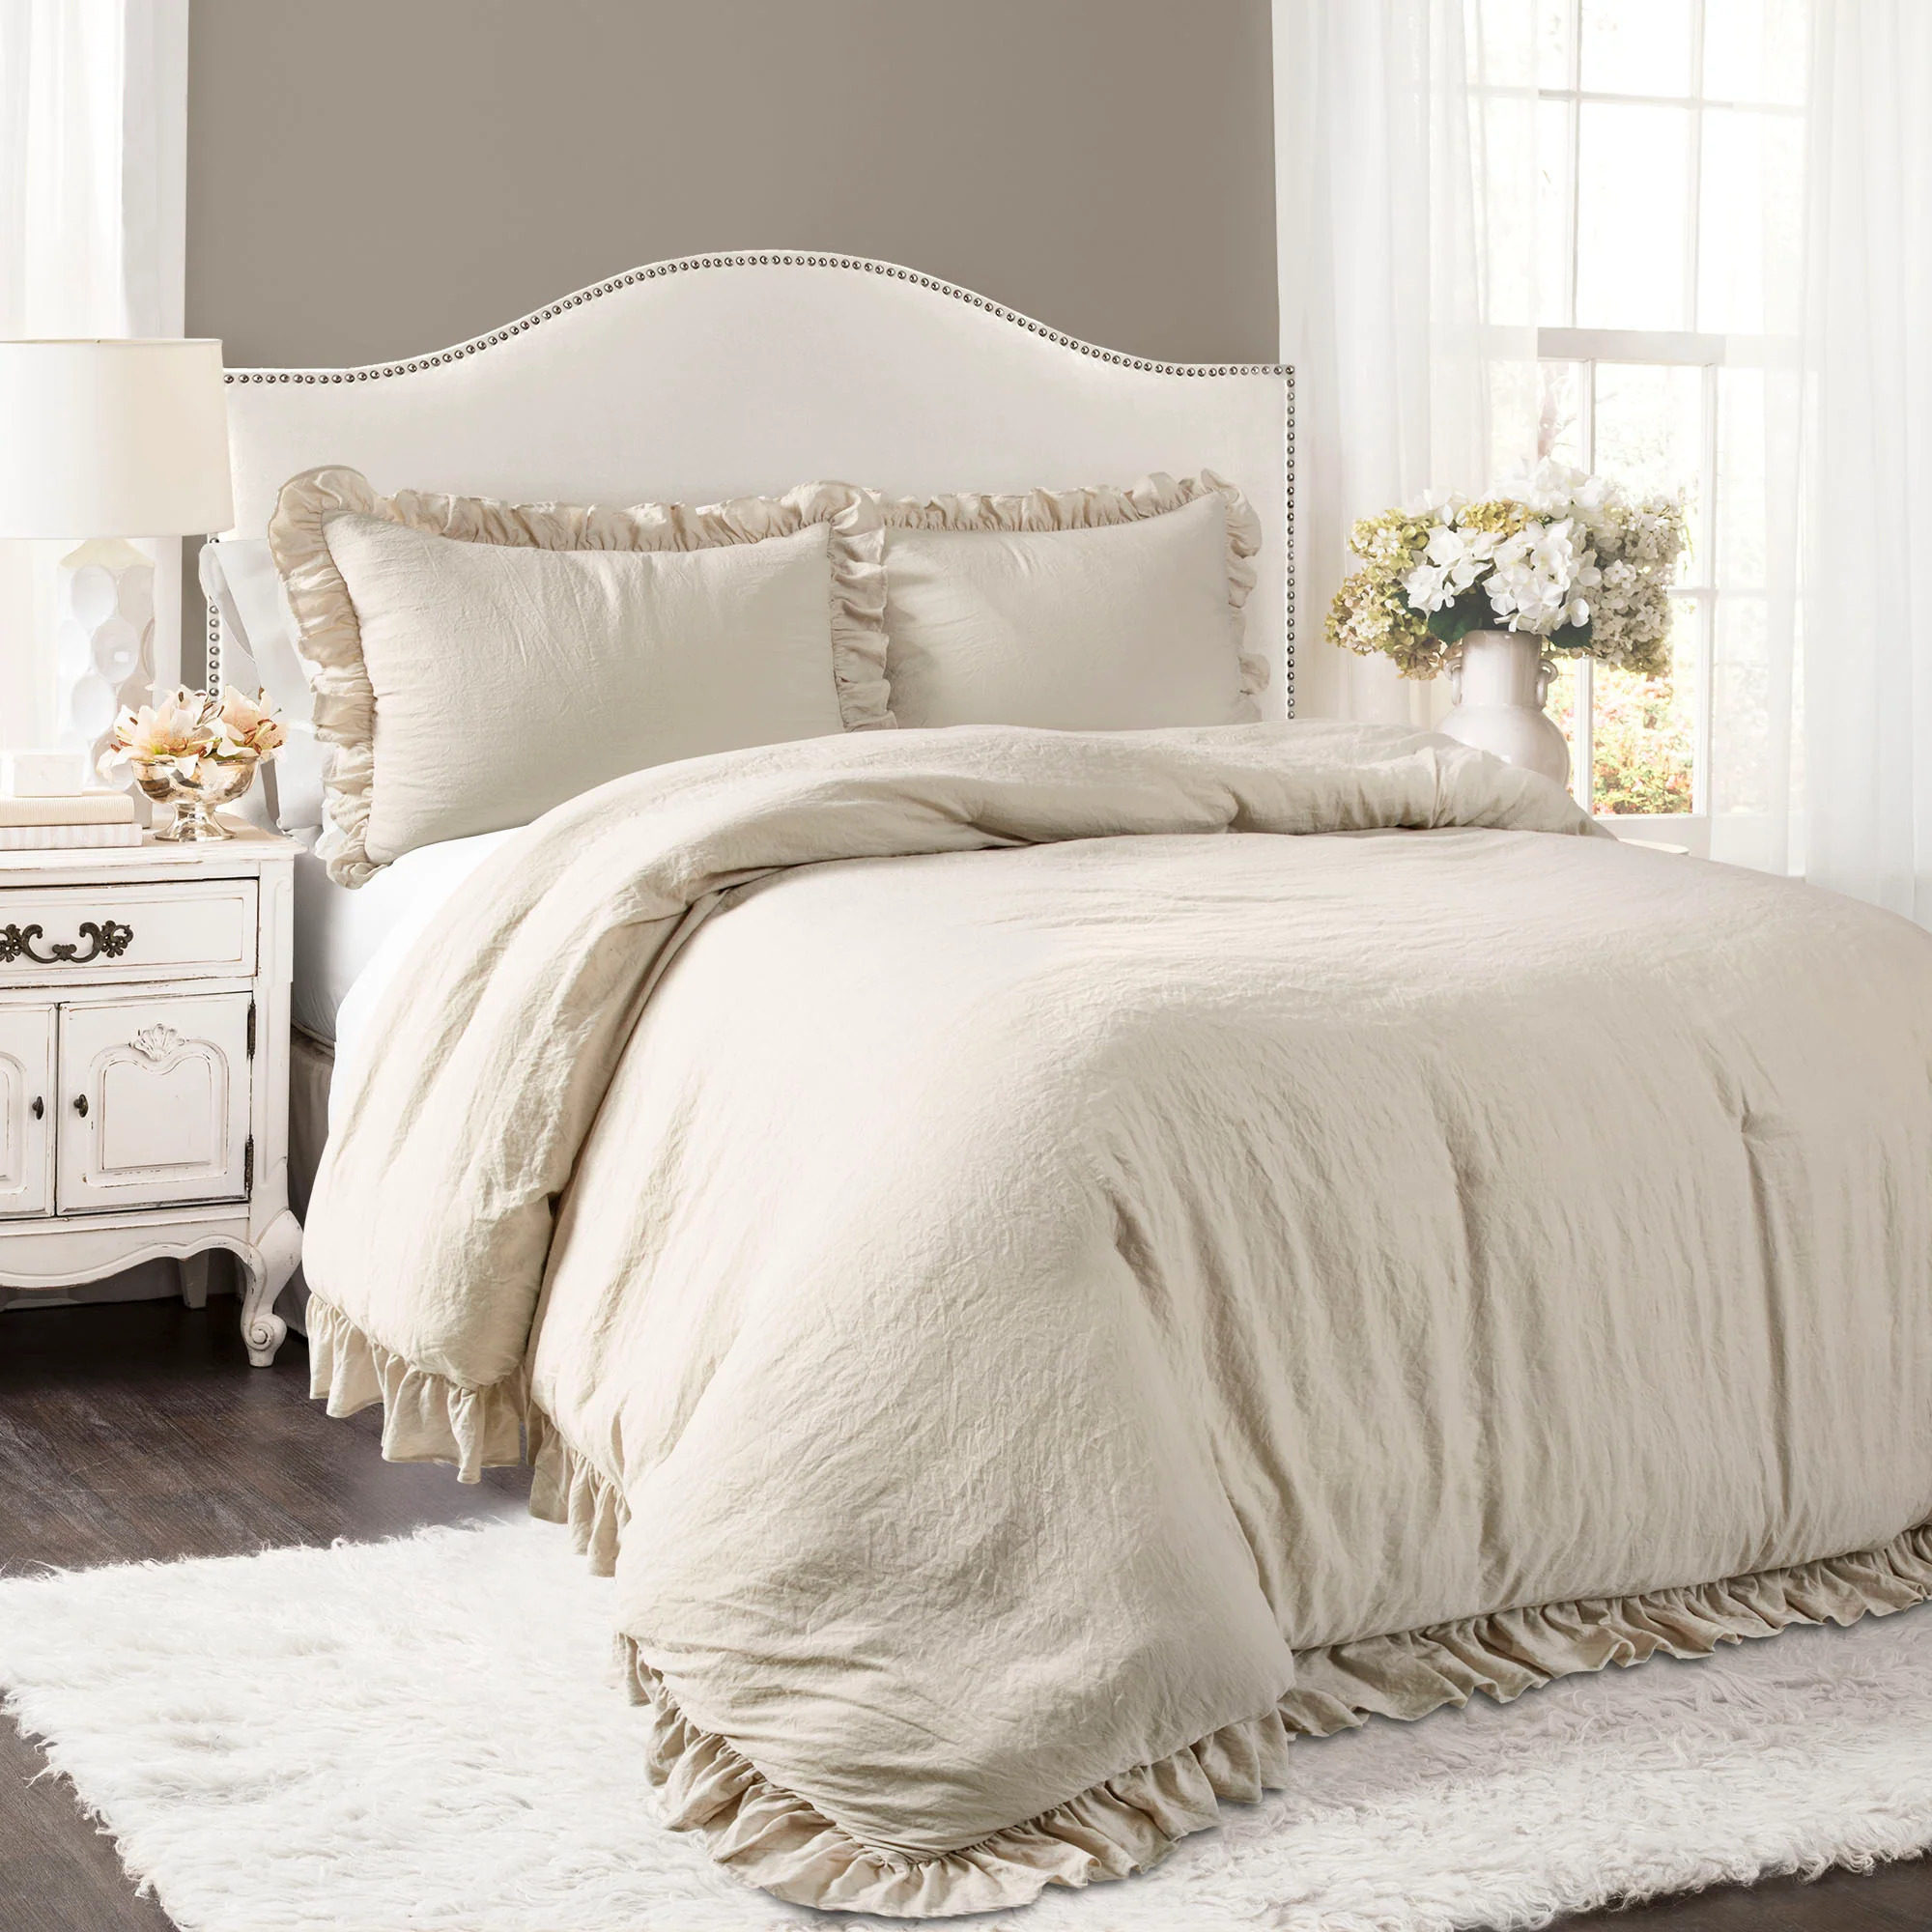 Lush Decor 3 Piece Comforter Sets, King with Pillow Shams - image 2 of 10